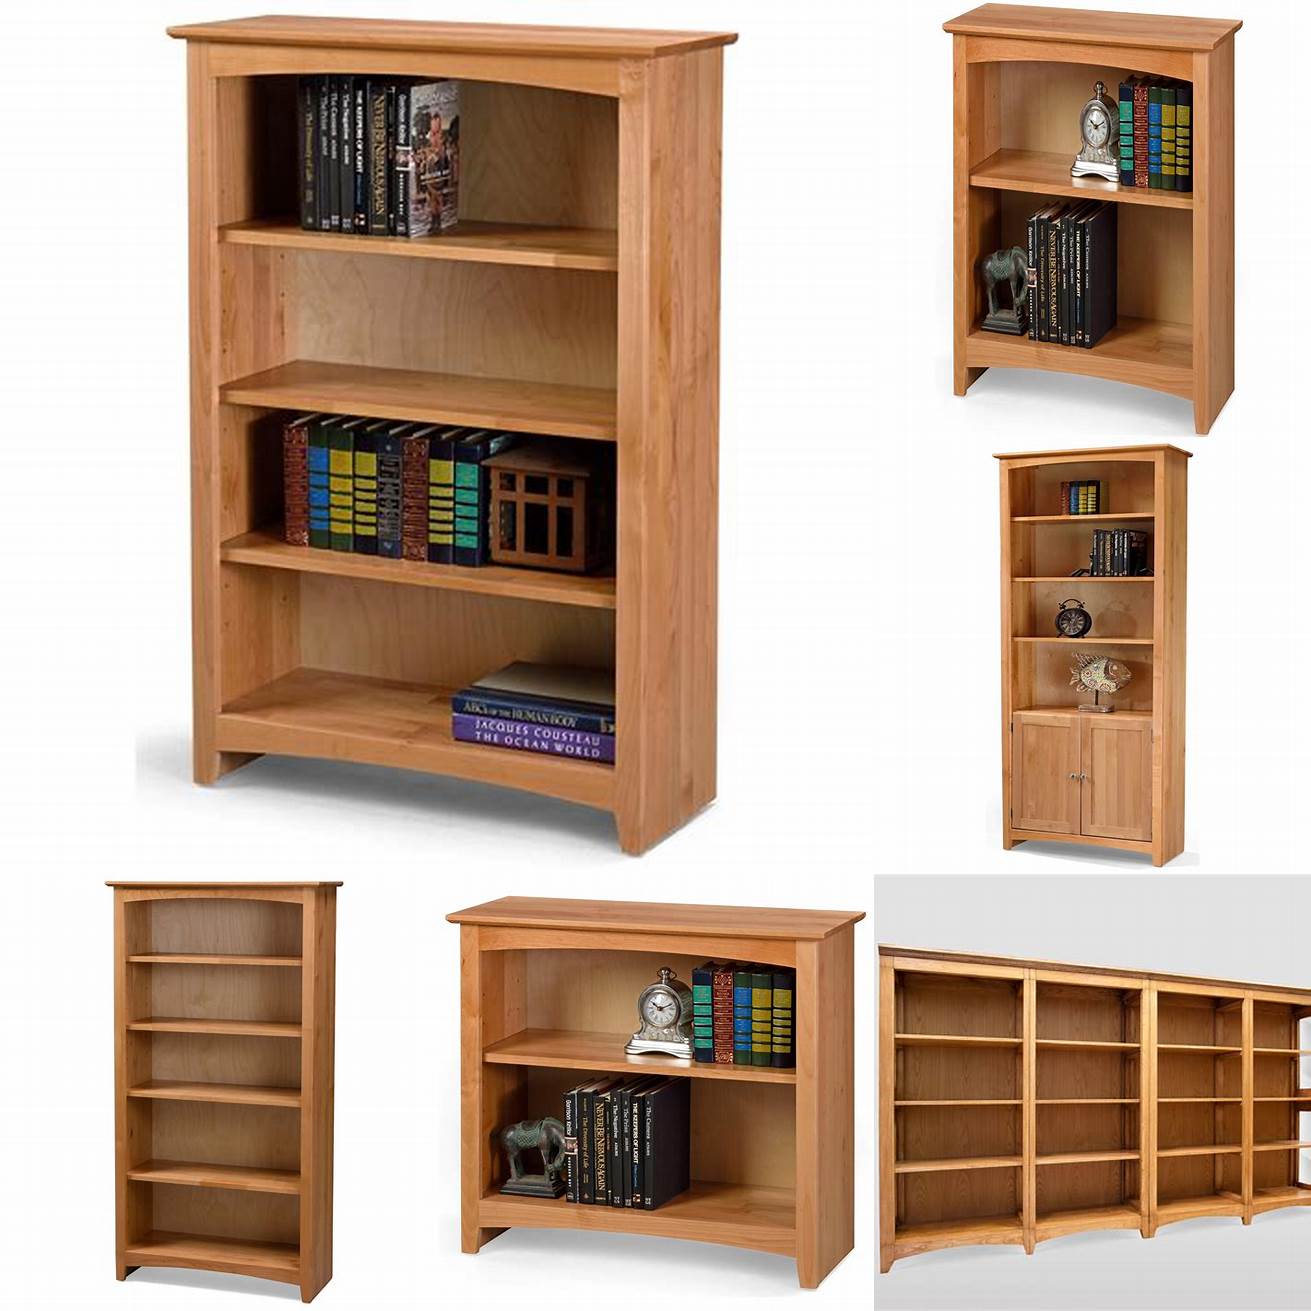 A stylish Swedish wooden bookcase with plenty of storage space